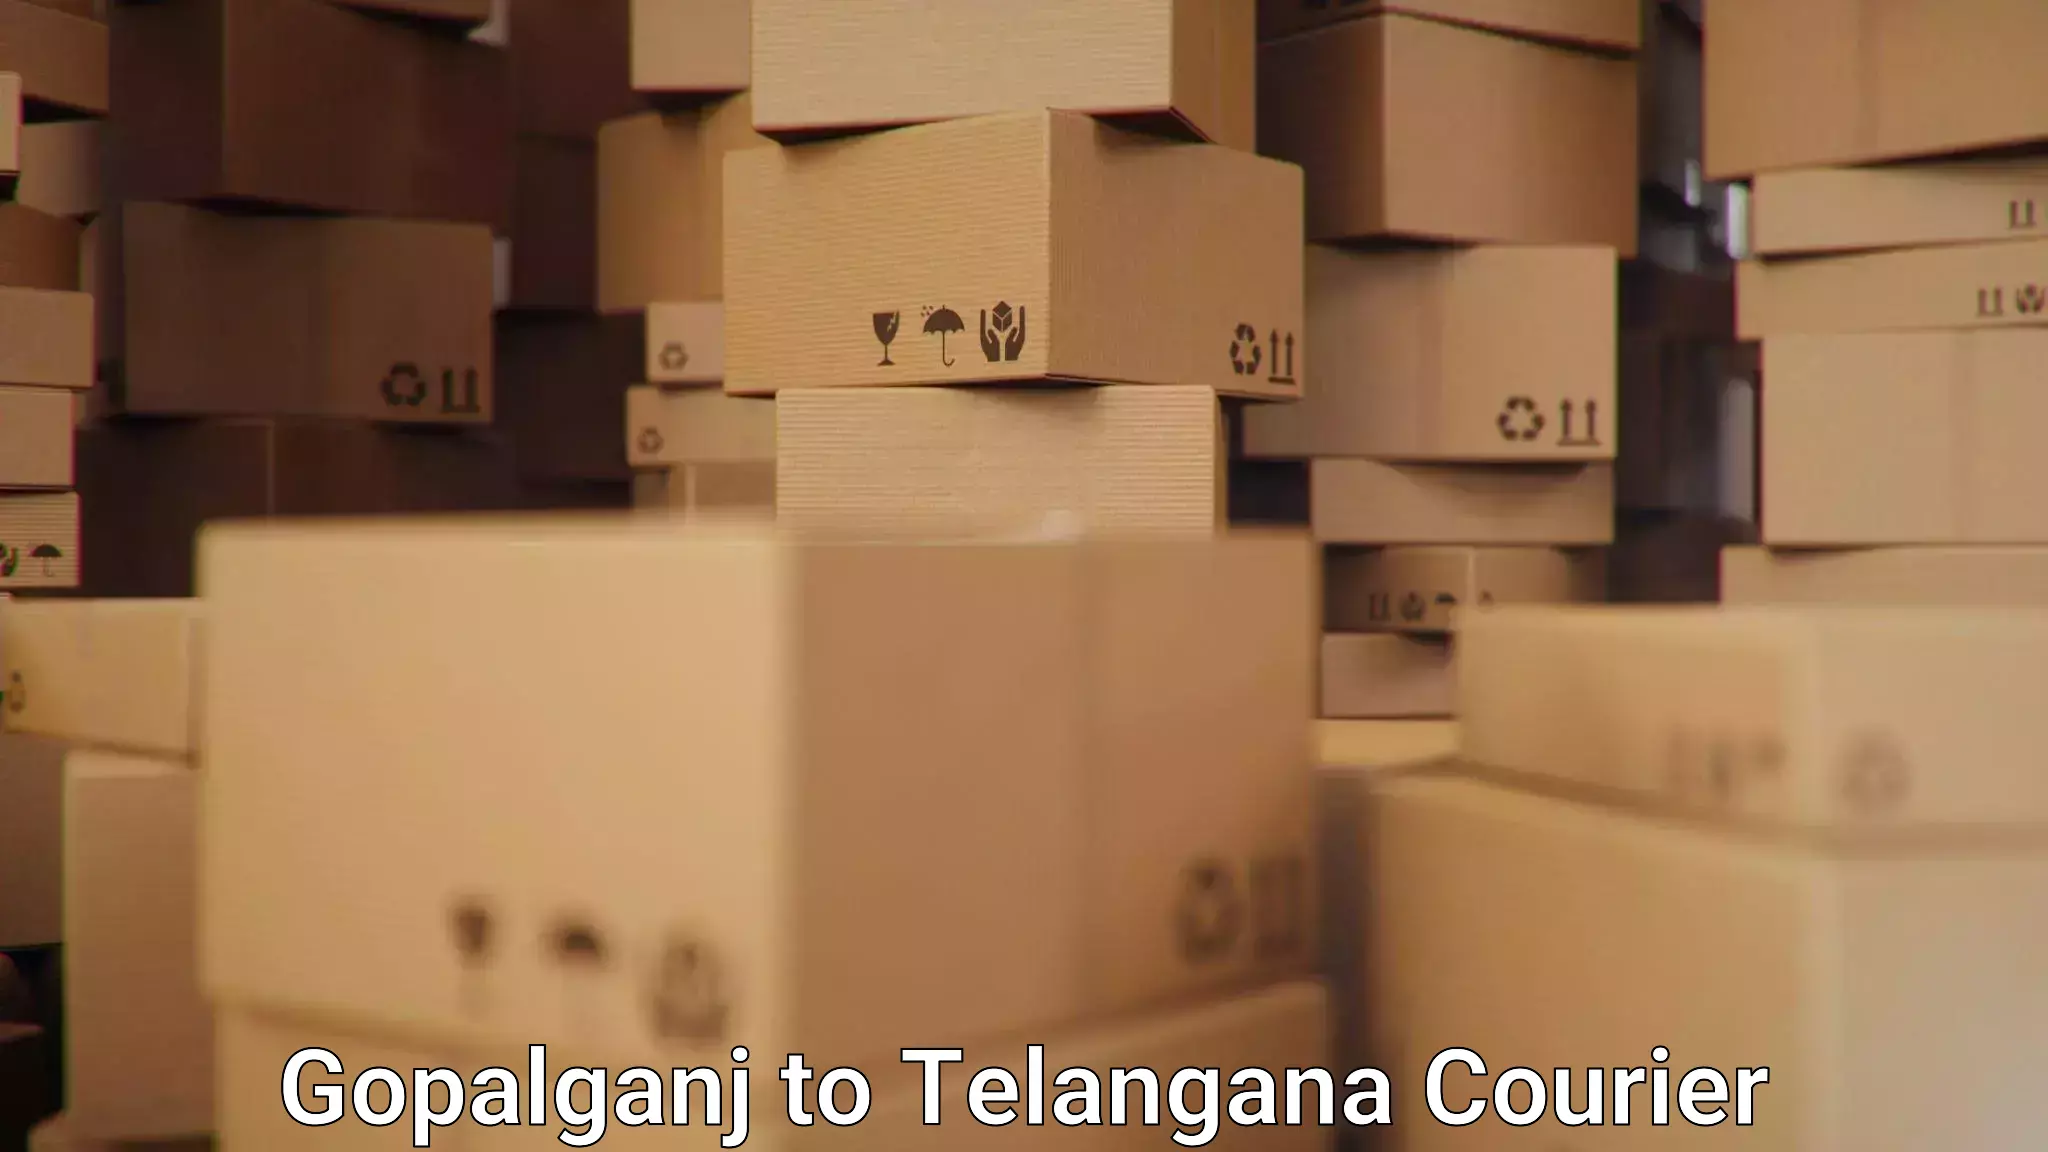 Courier service comparison Gopalganj to Bijinapalle